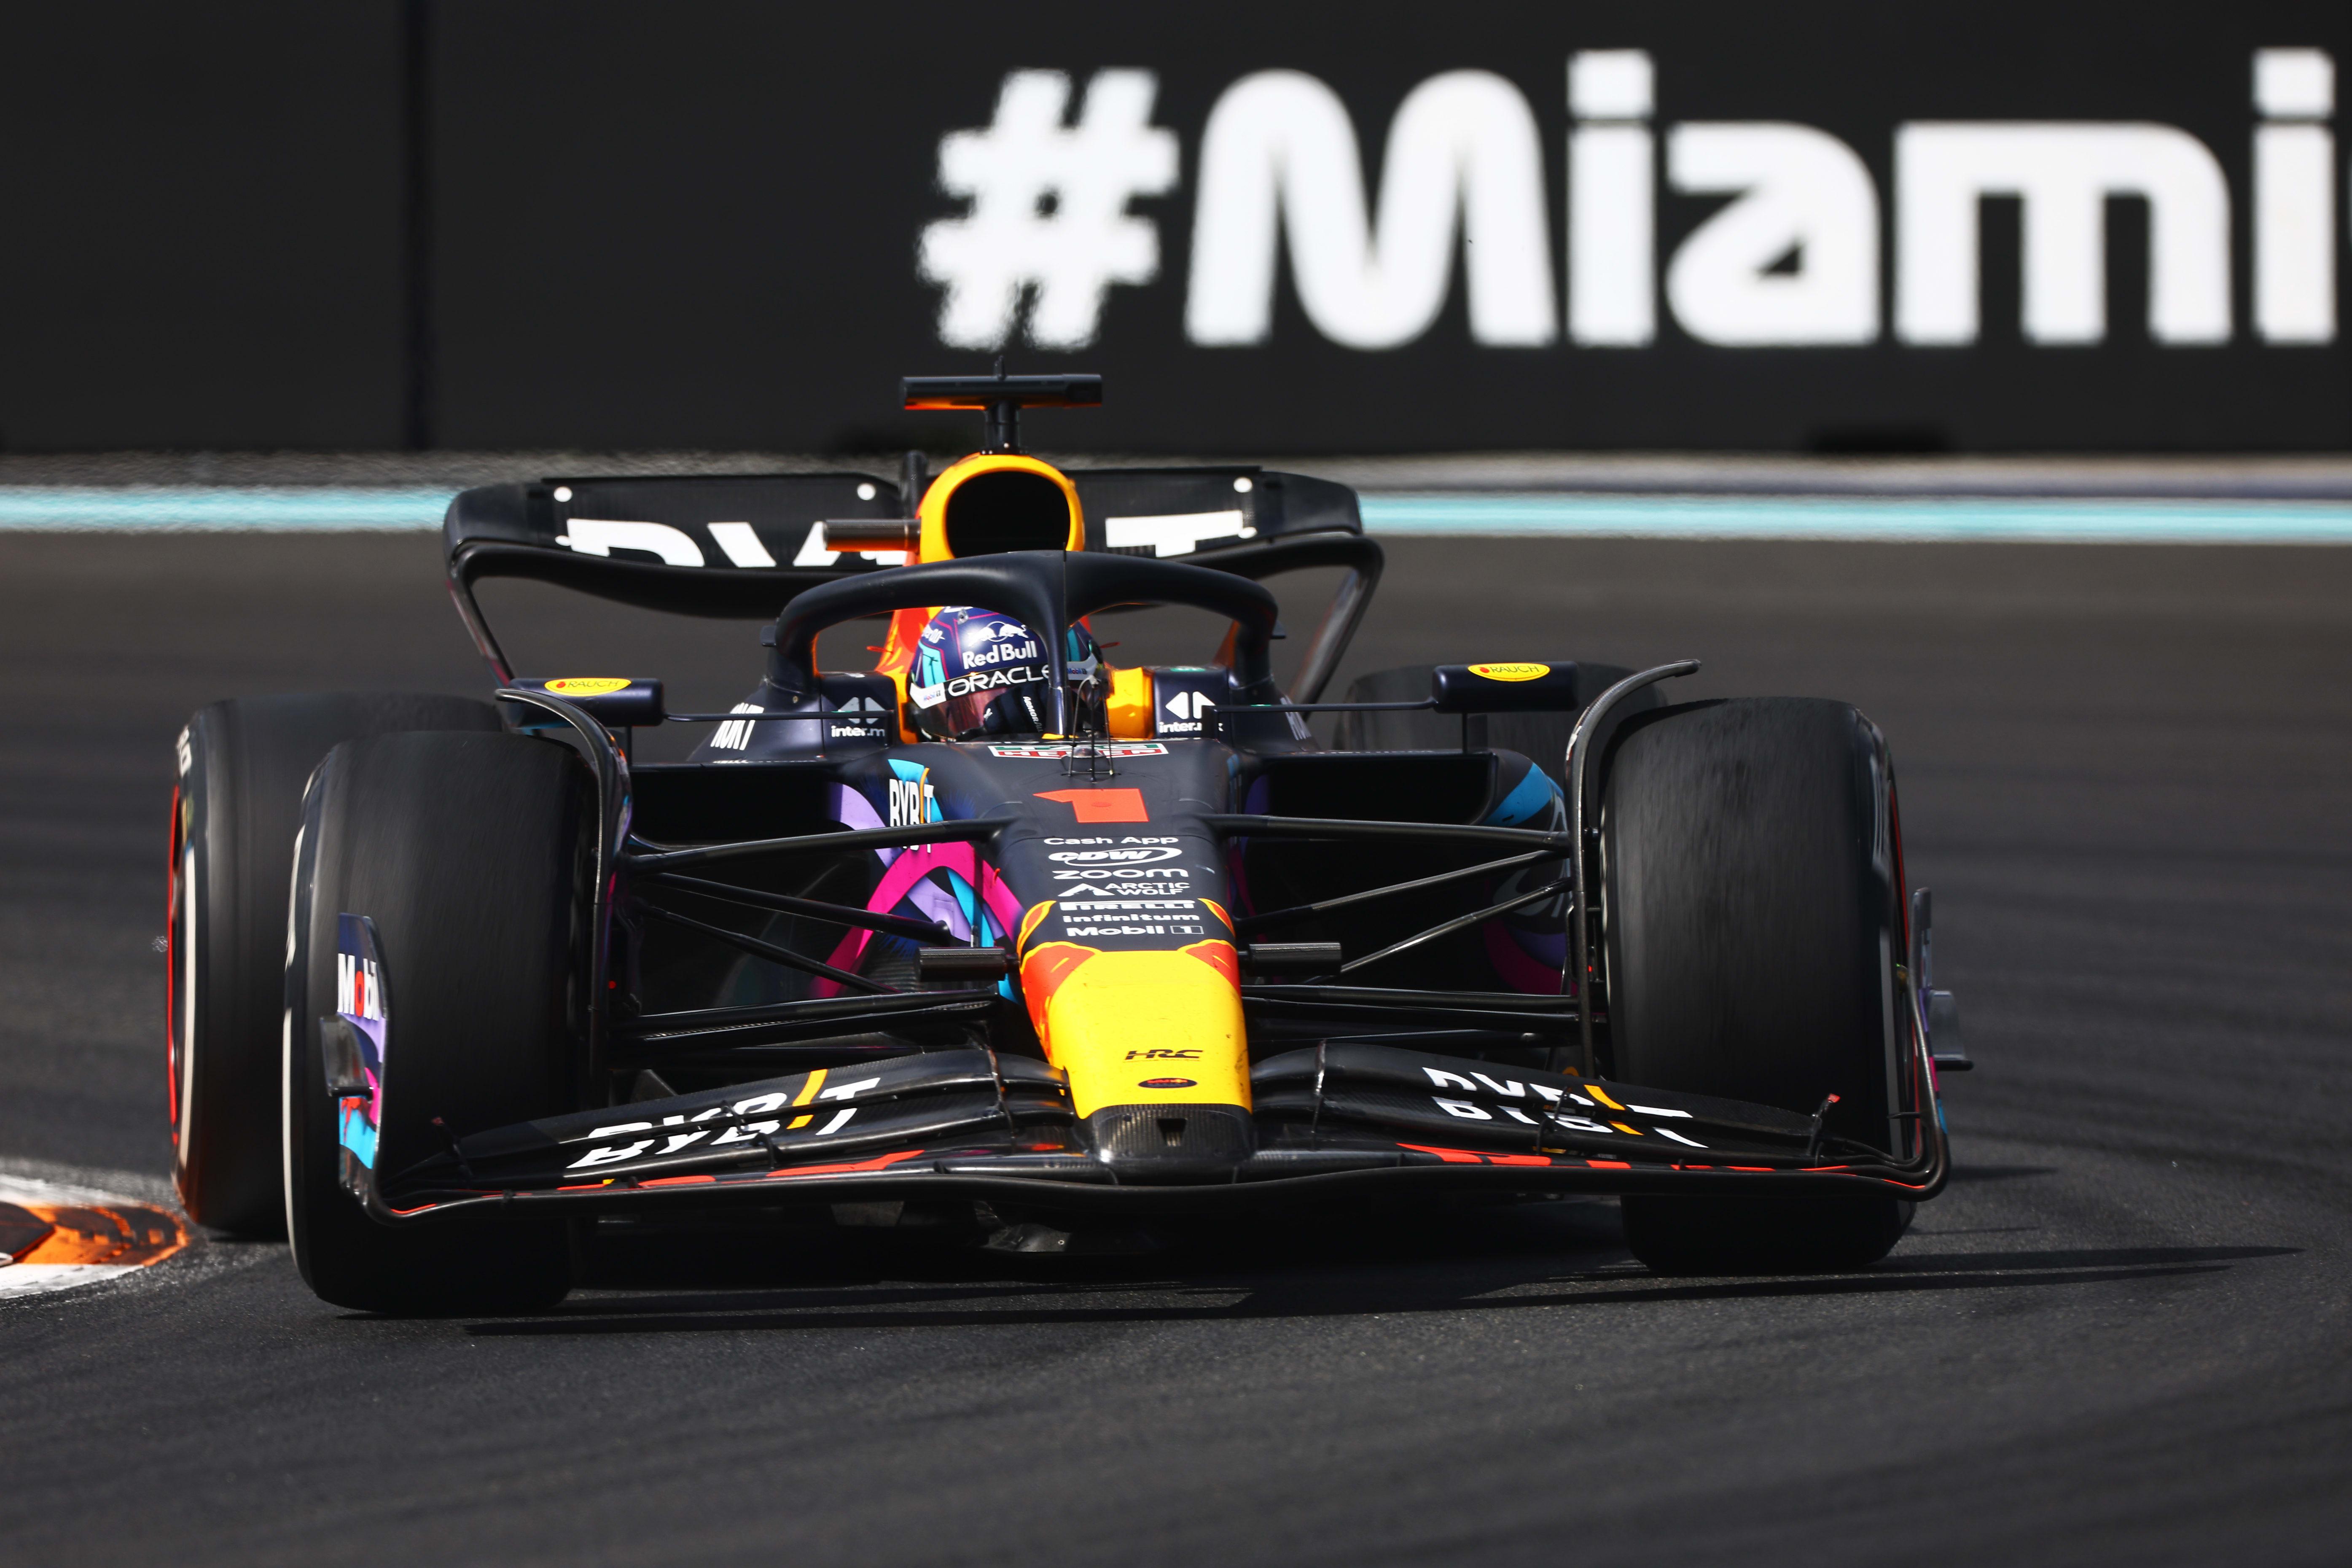 Miami Grand Prix F1 race report and reaction